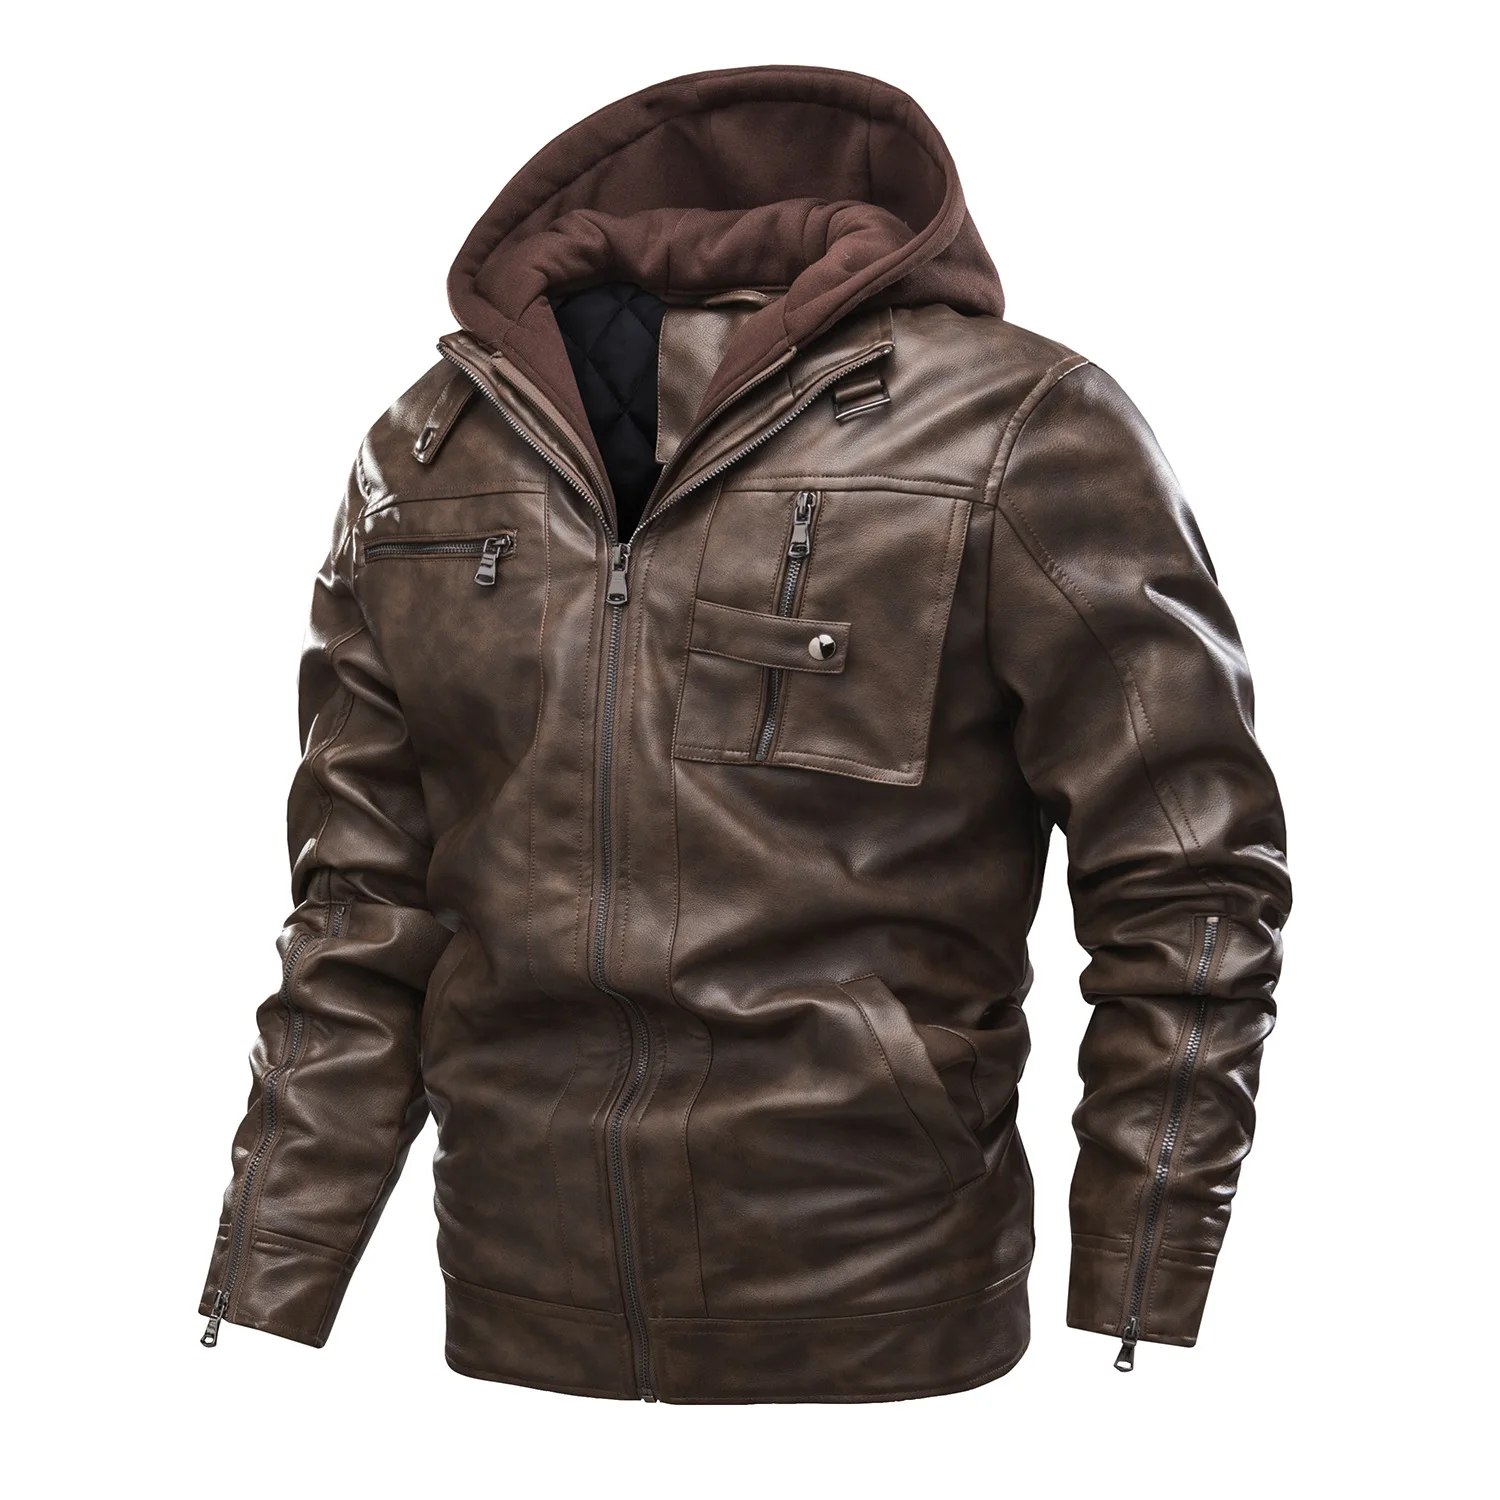 2022 New Winter Men's Leather Jacket Warm Coat Hooded Luxury Korean Street Fashion Clothing Thickened Cotton Shirt